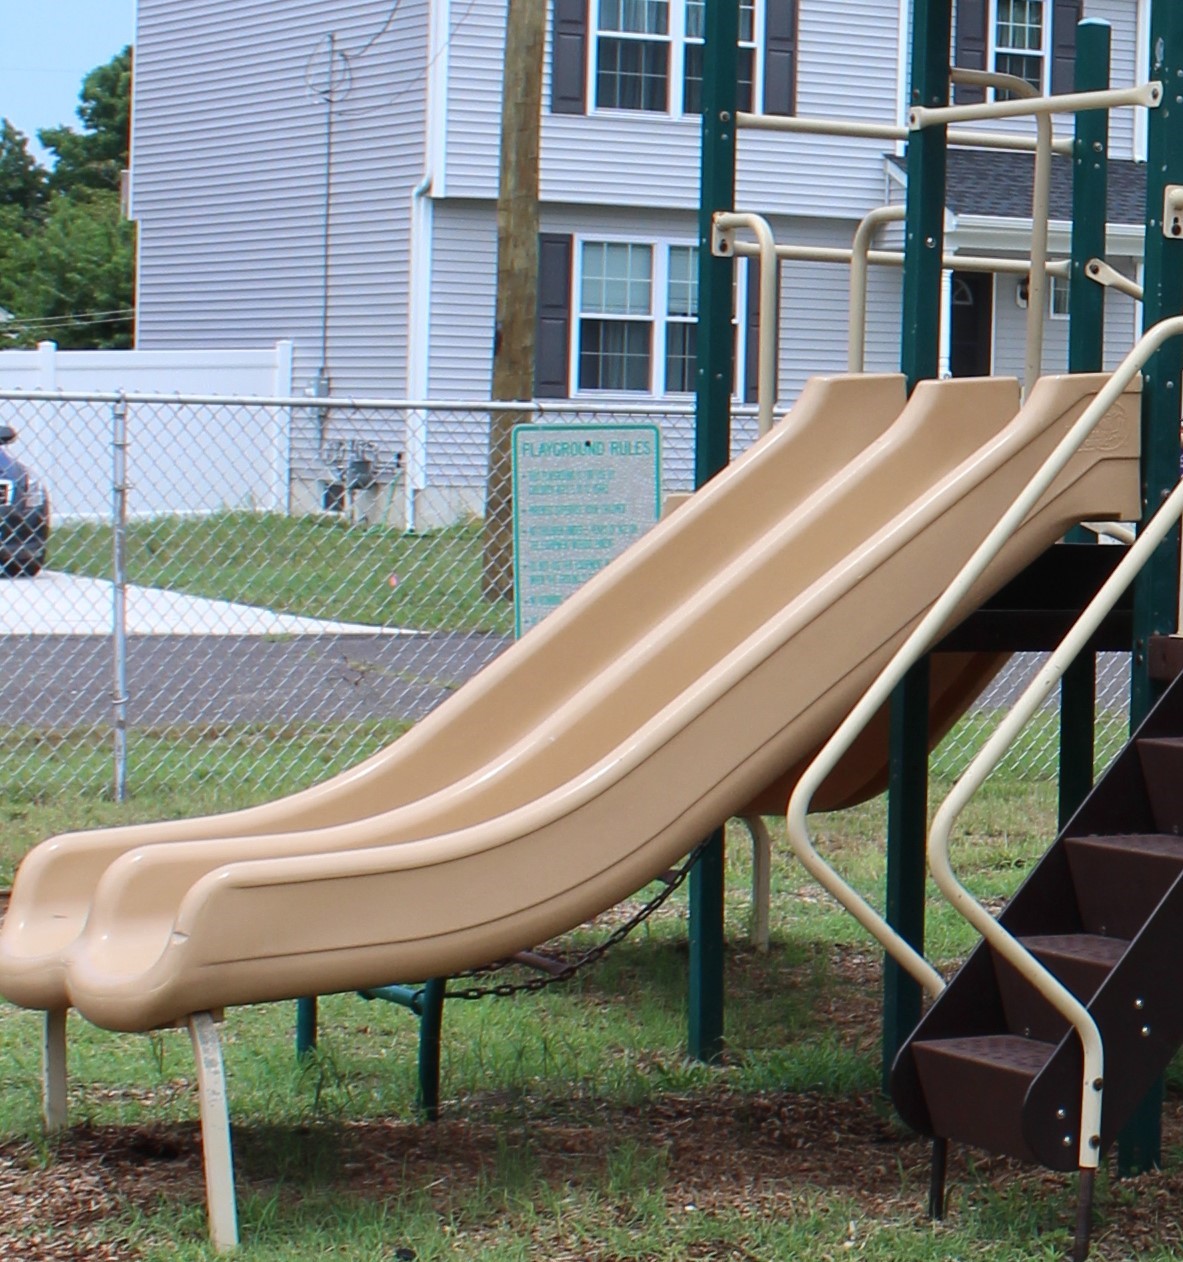 Friendship Park Playground in Millville NJ - SLIDE - side by side slide TALL